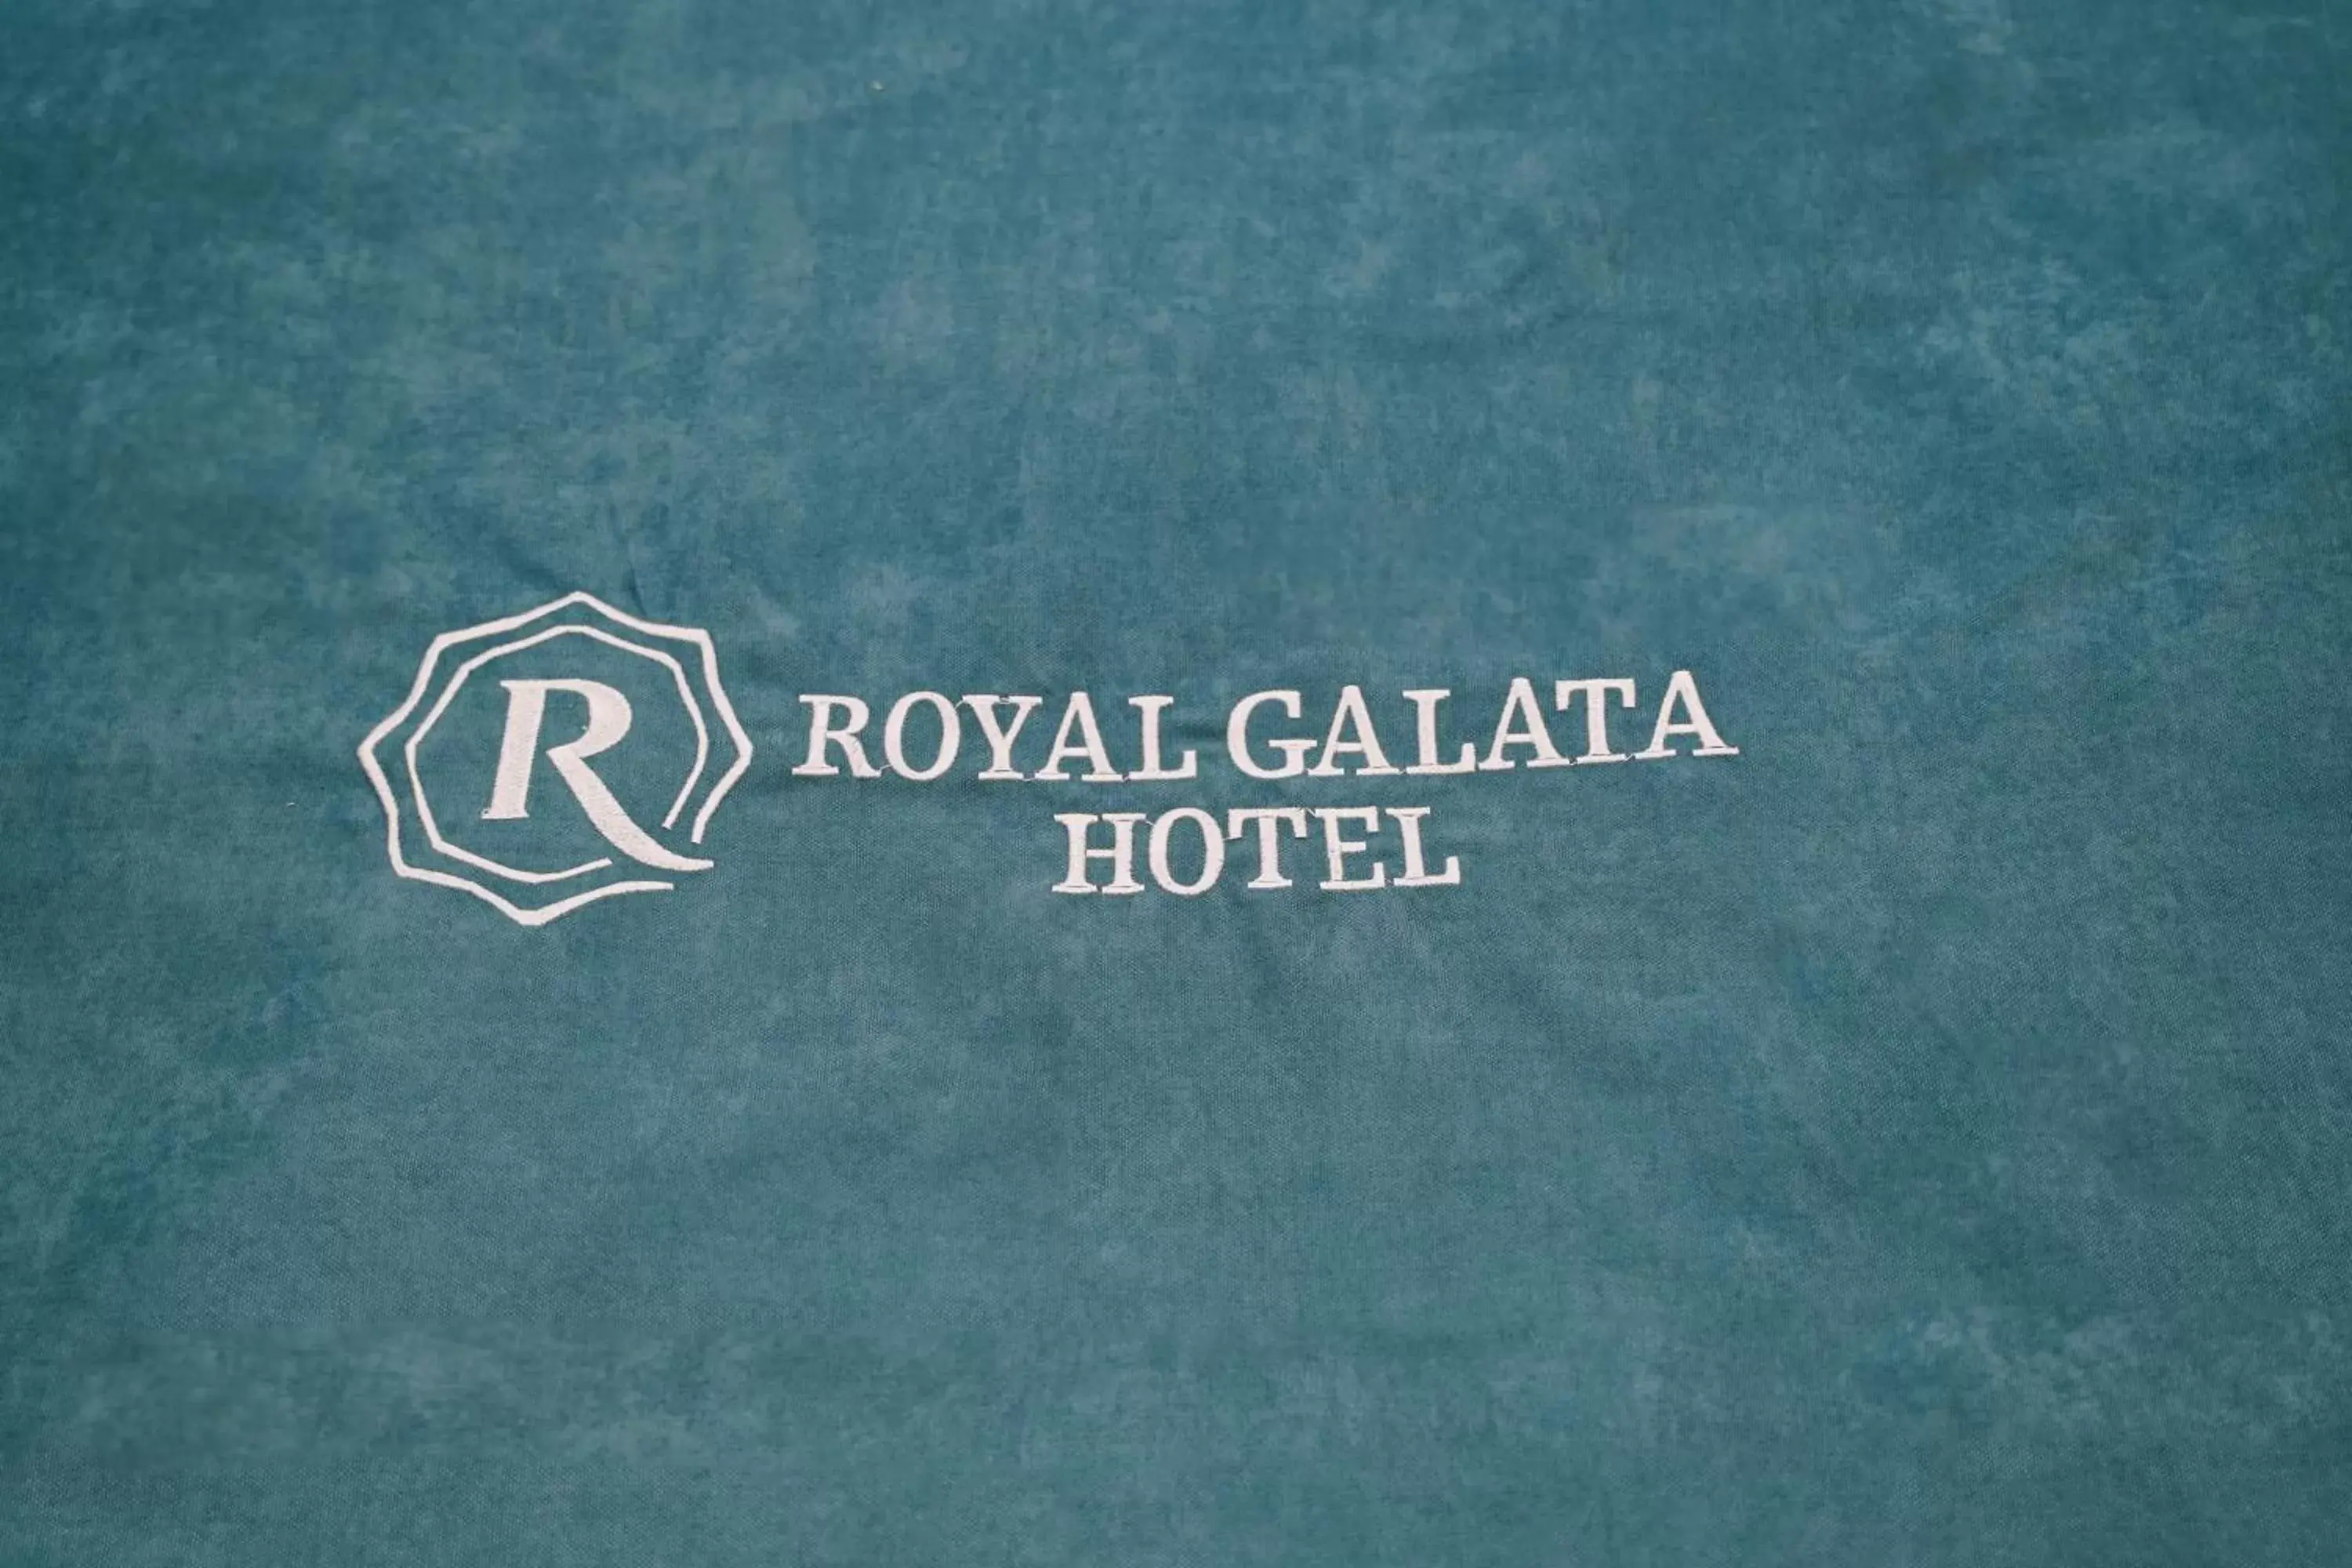 Royal Galata Hotel